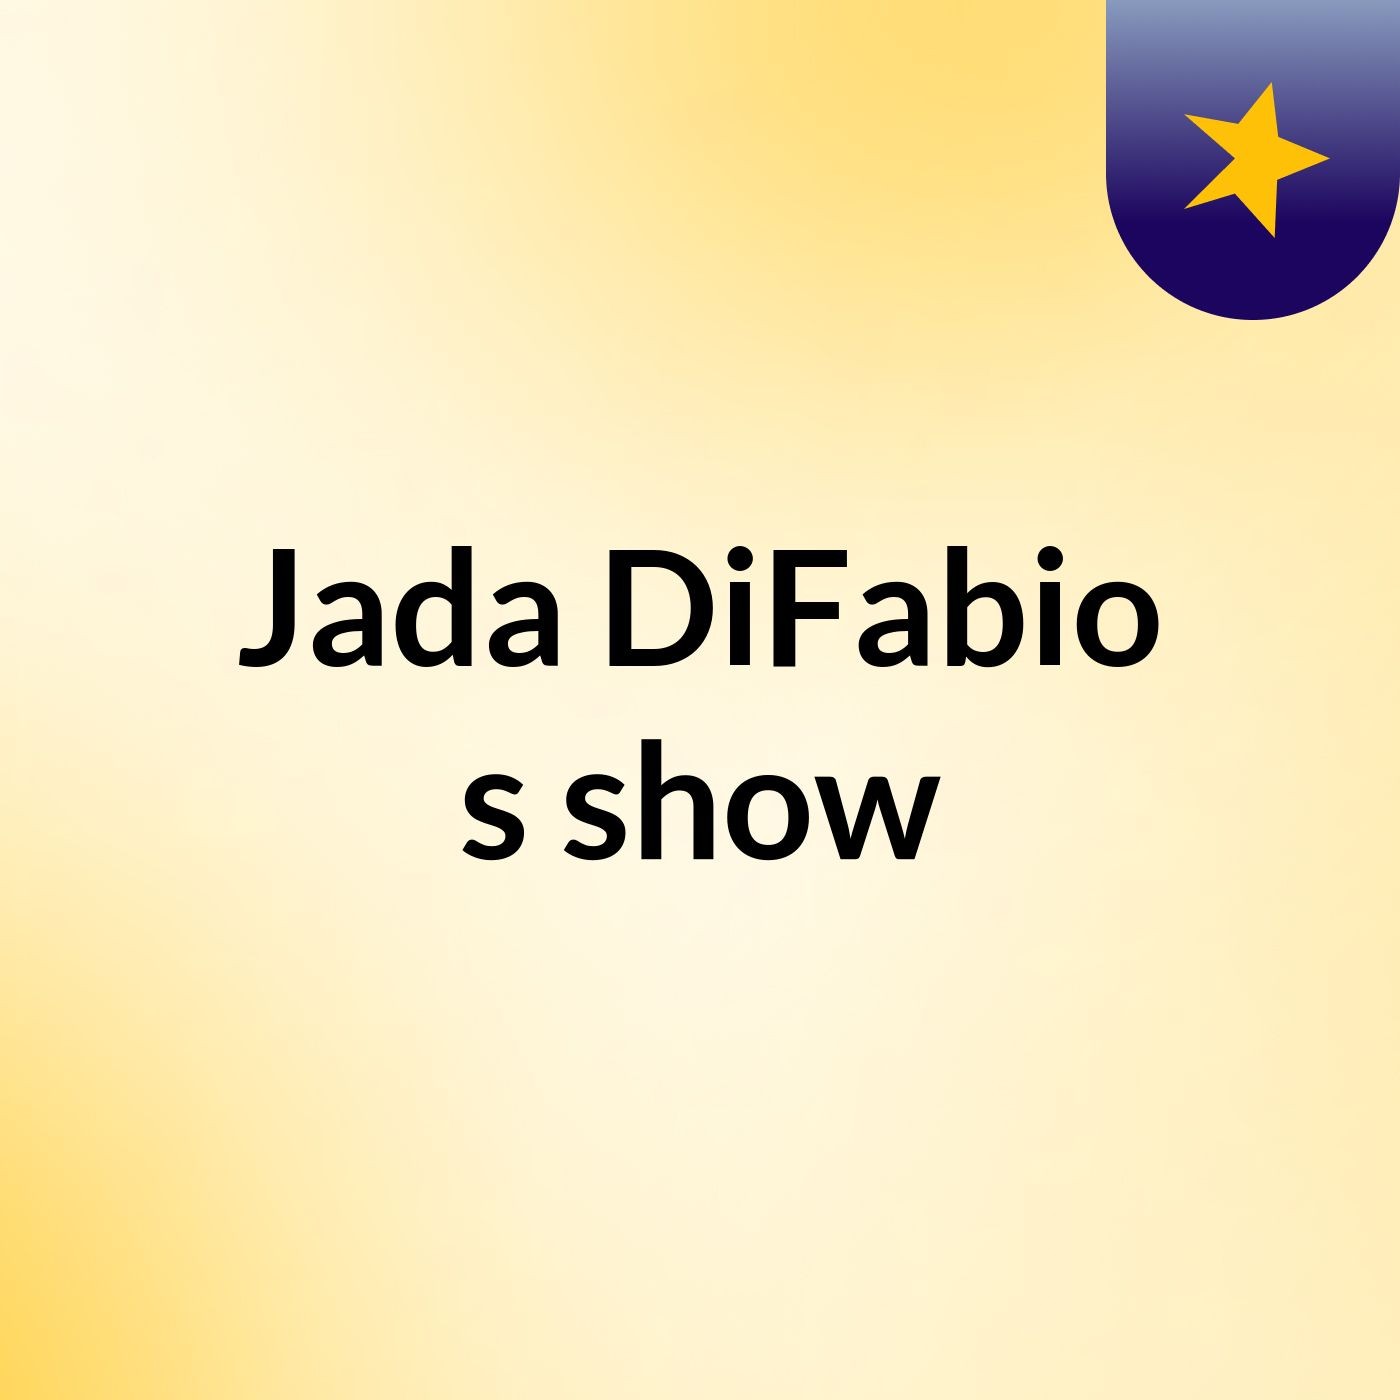 Episode 6 - Jada DiFabio's show